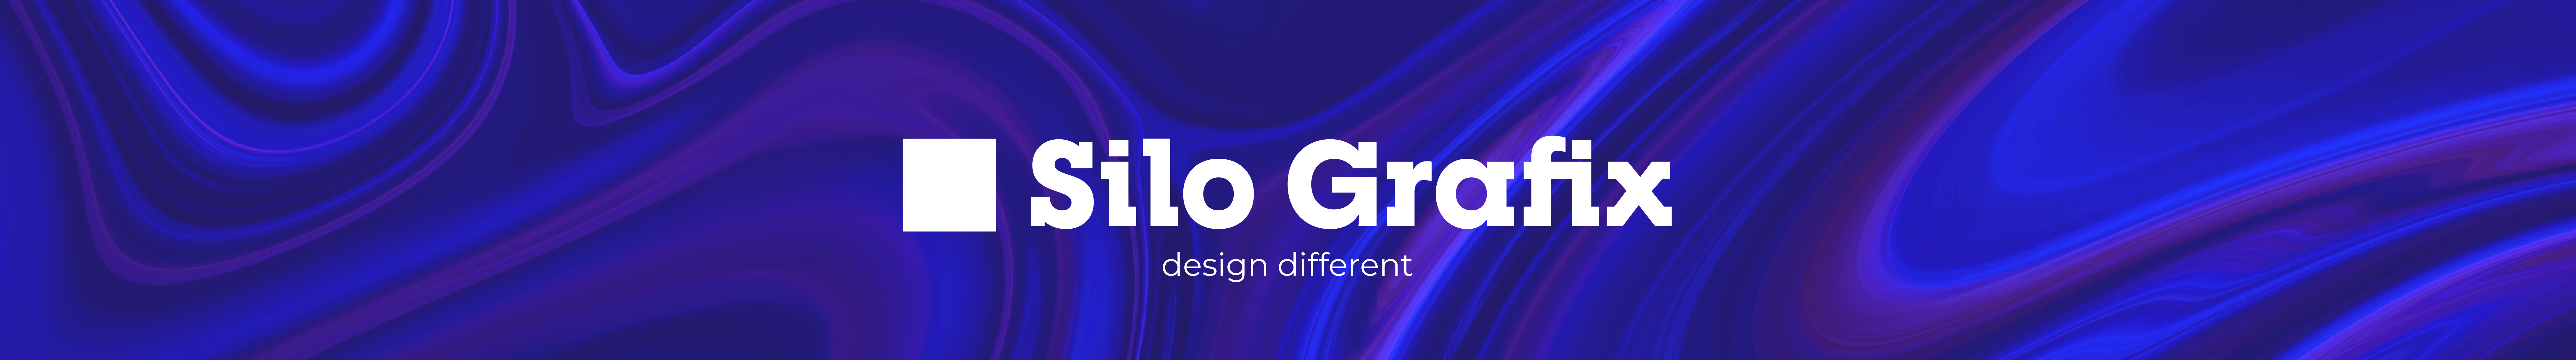 Silo Grafix profil başlığı